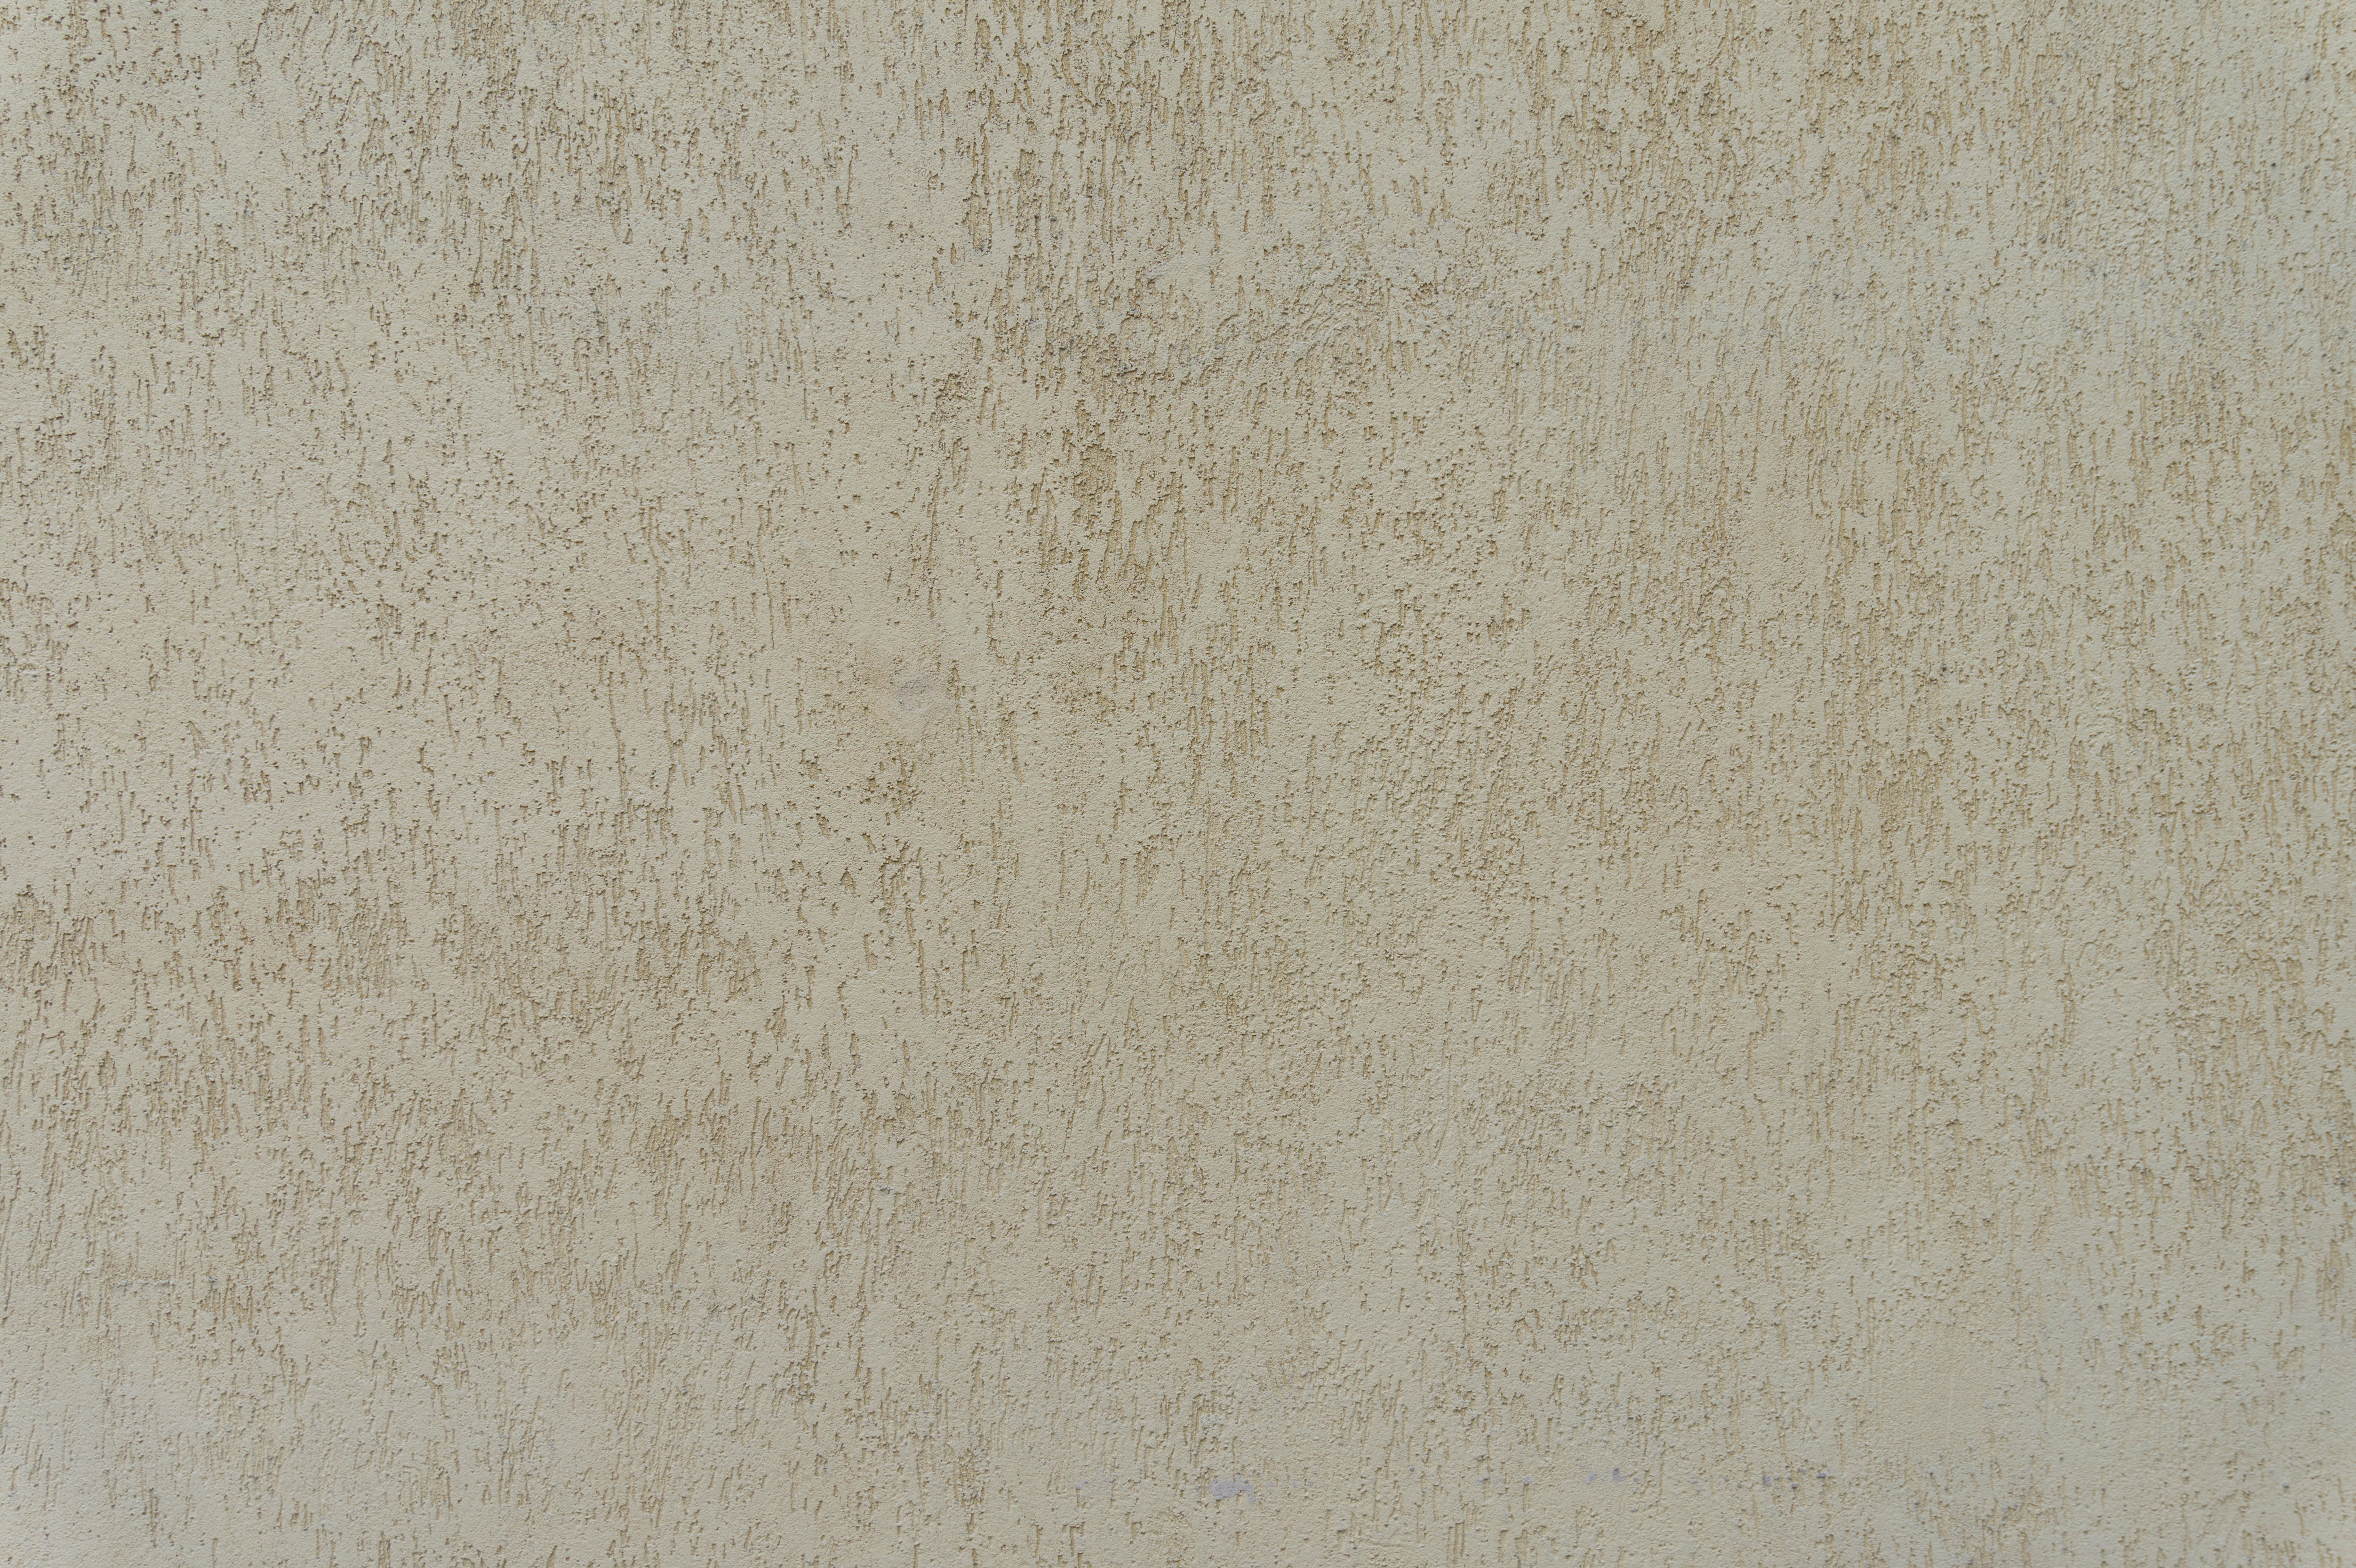 Plaster wall - Concrete - Texturify - Free textures